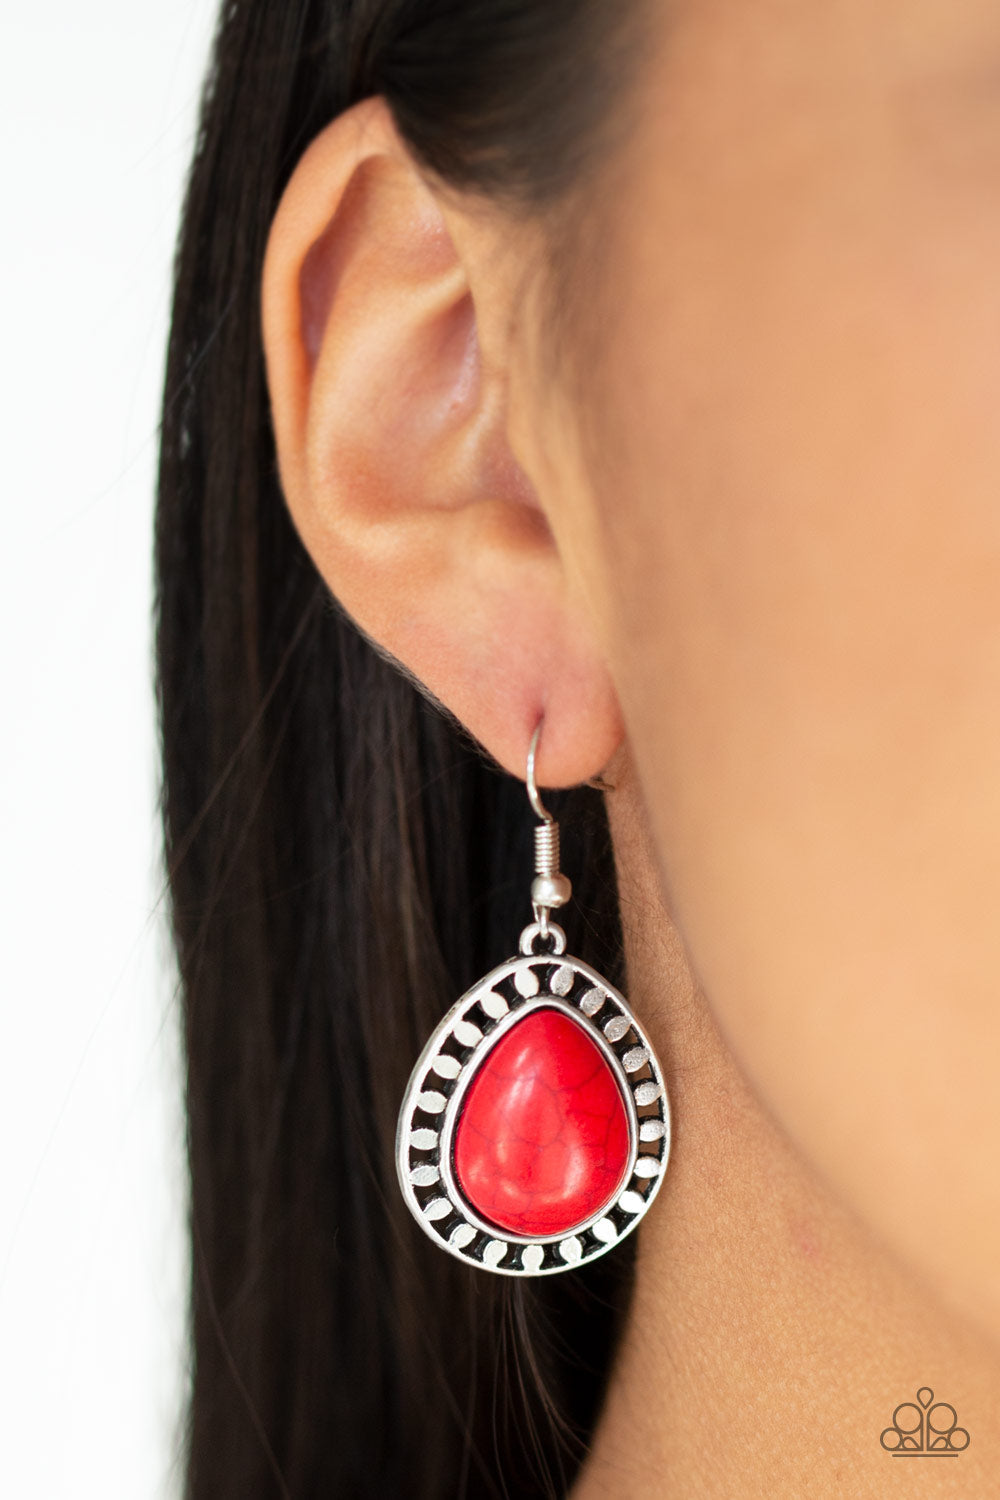 Paparazzi Sahara Serenity - Red Stone - Silver Earrings - $5 Jewelry With Ashley Swint